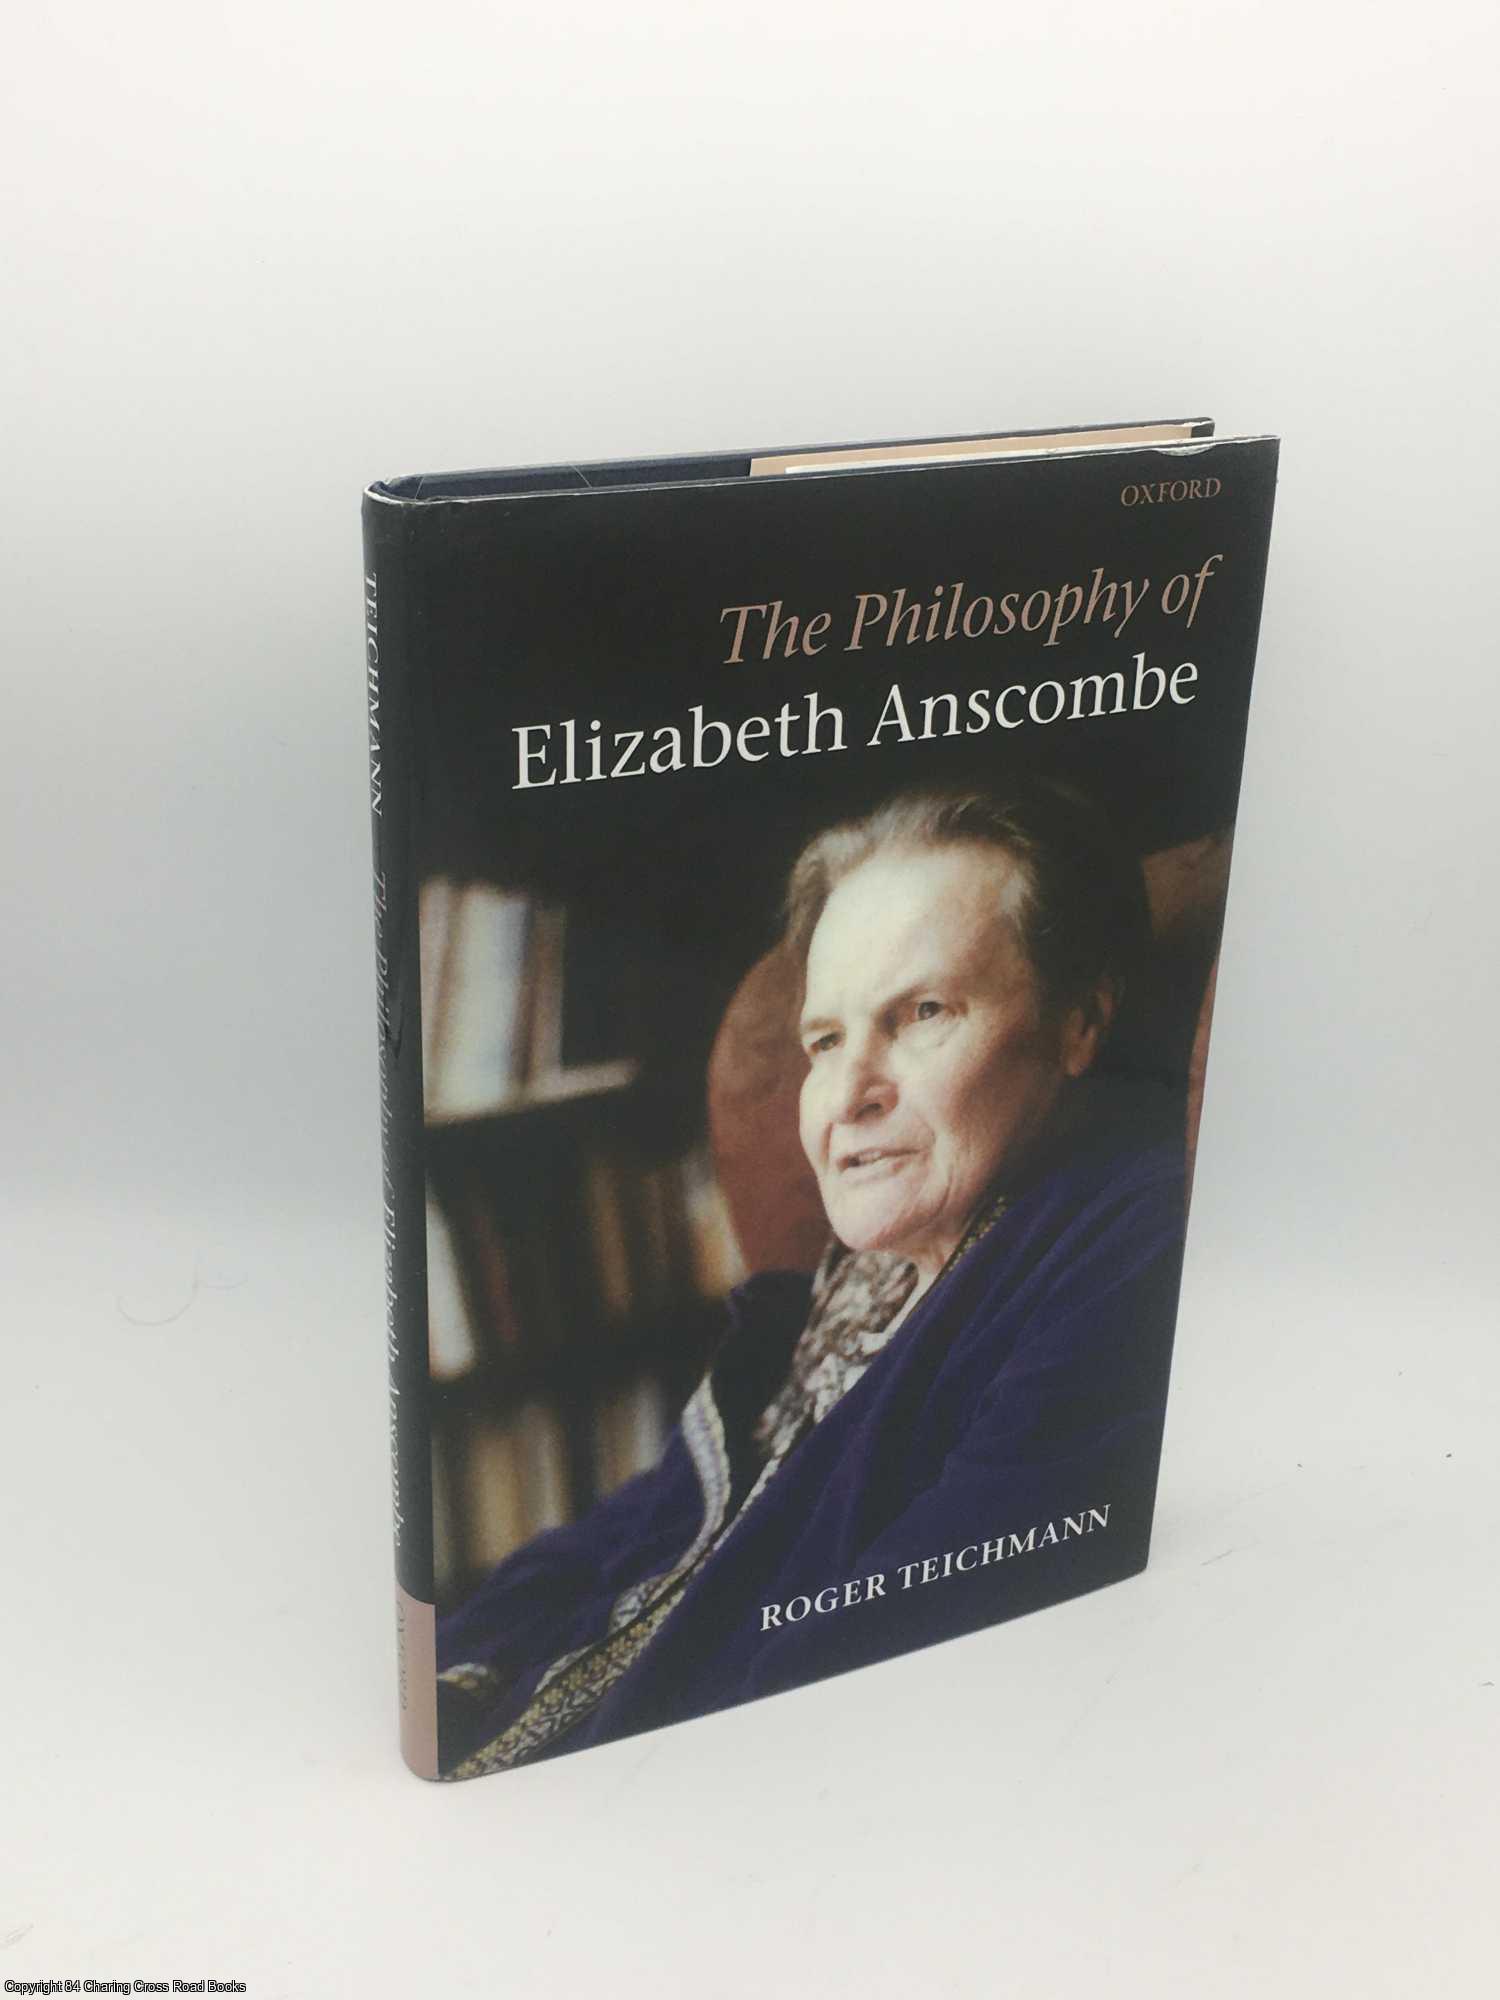 Teichmann, Roger - The Philosophy of Elizabeth Anscombe